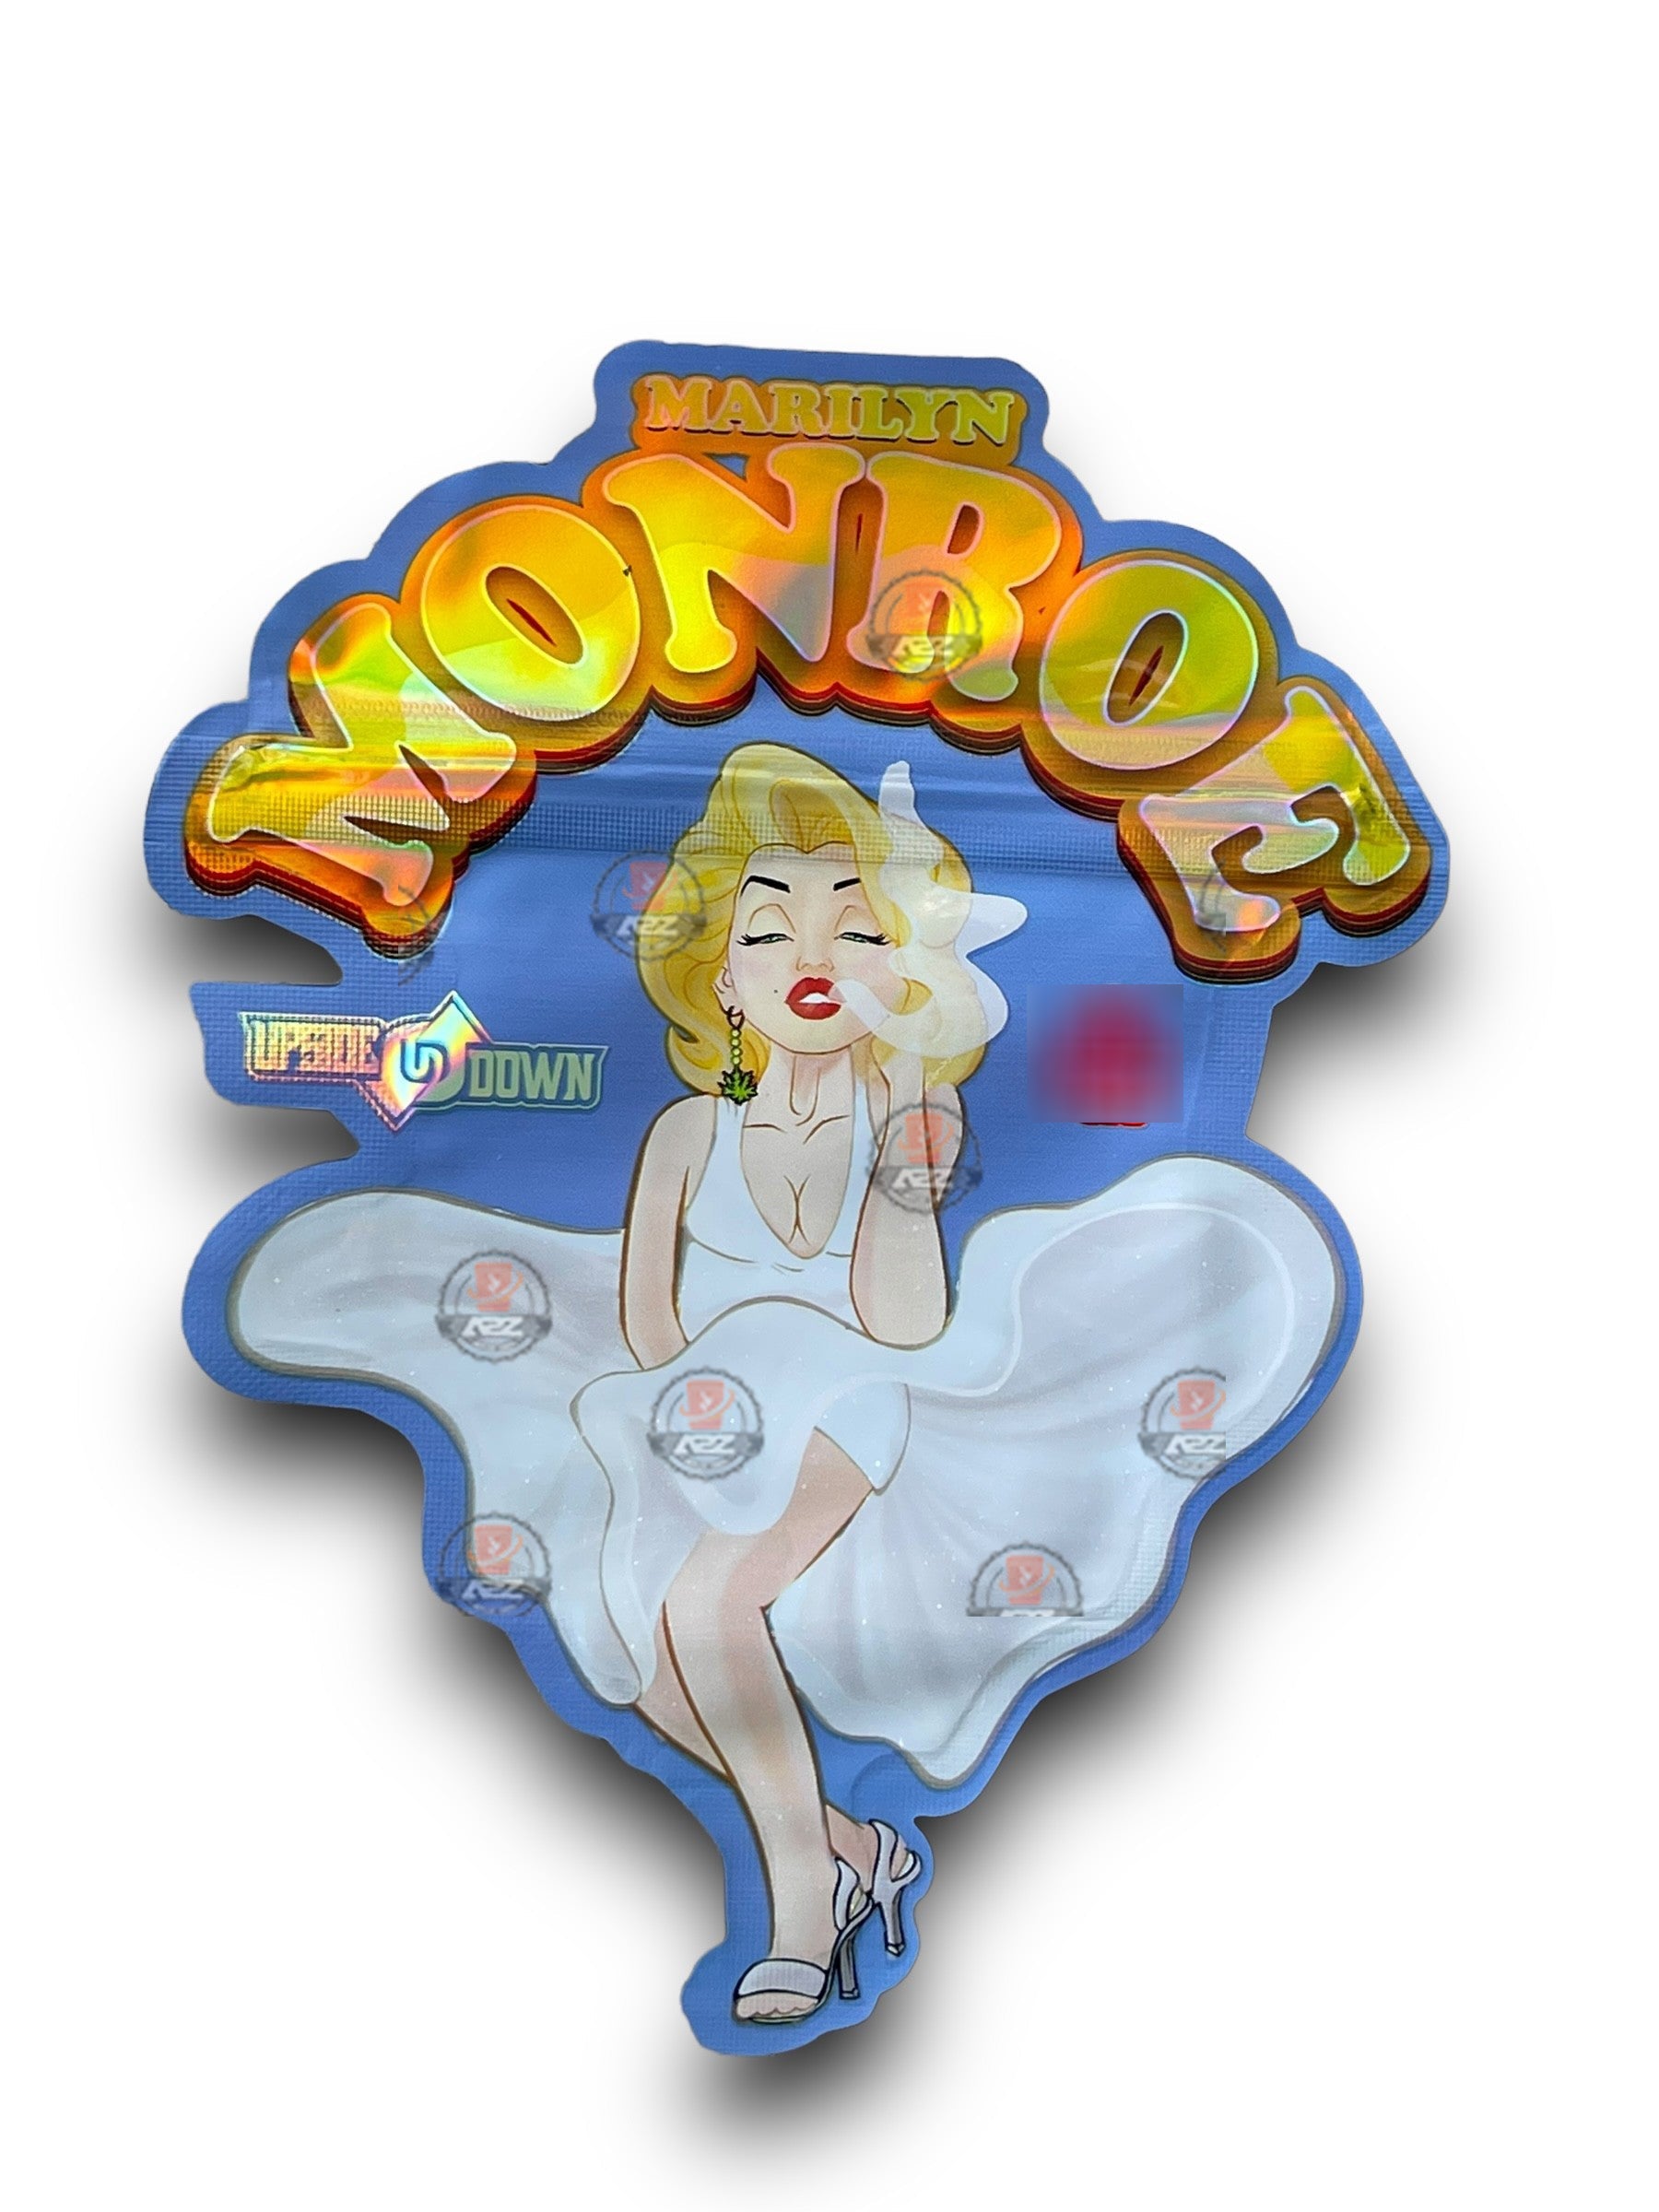 Marilyn Monroe 3.5G Mylar Bag Holographic Upside Down